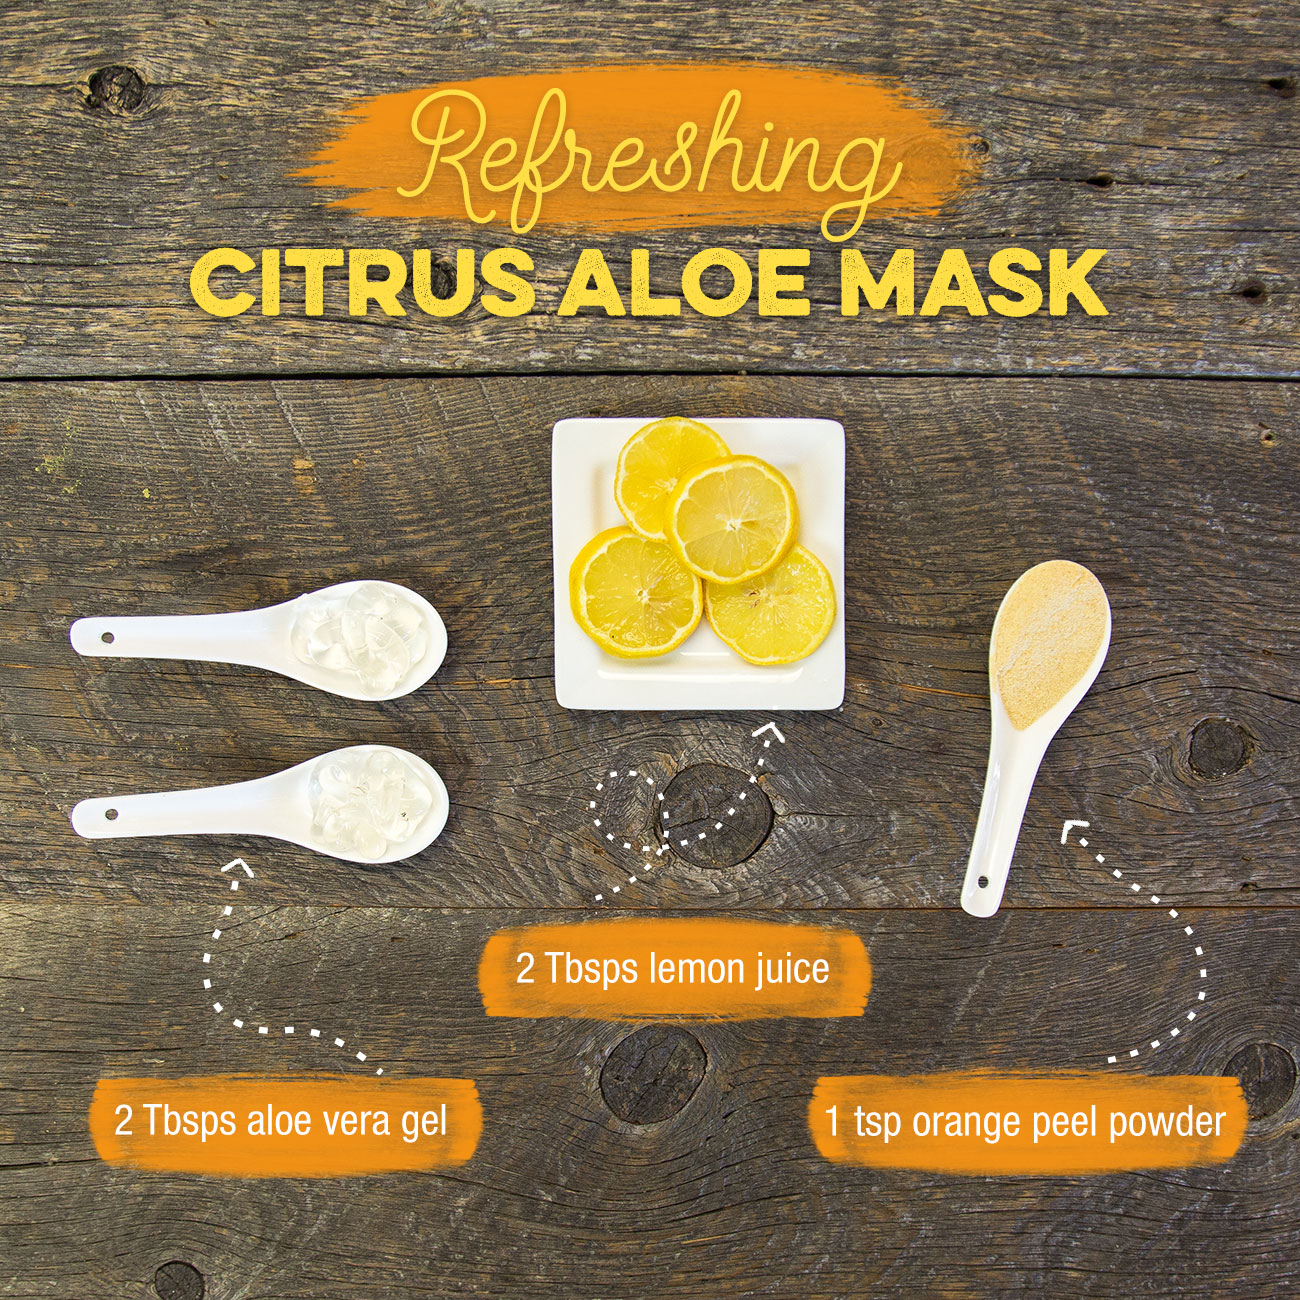 Refreshing Citrus Aloe Mask Recipe